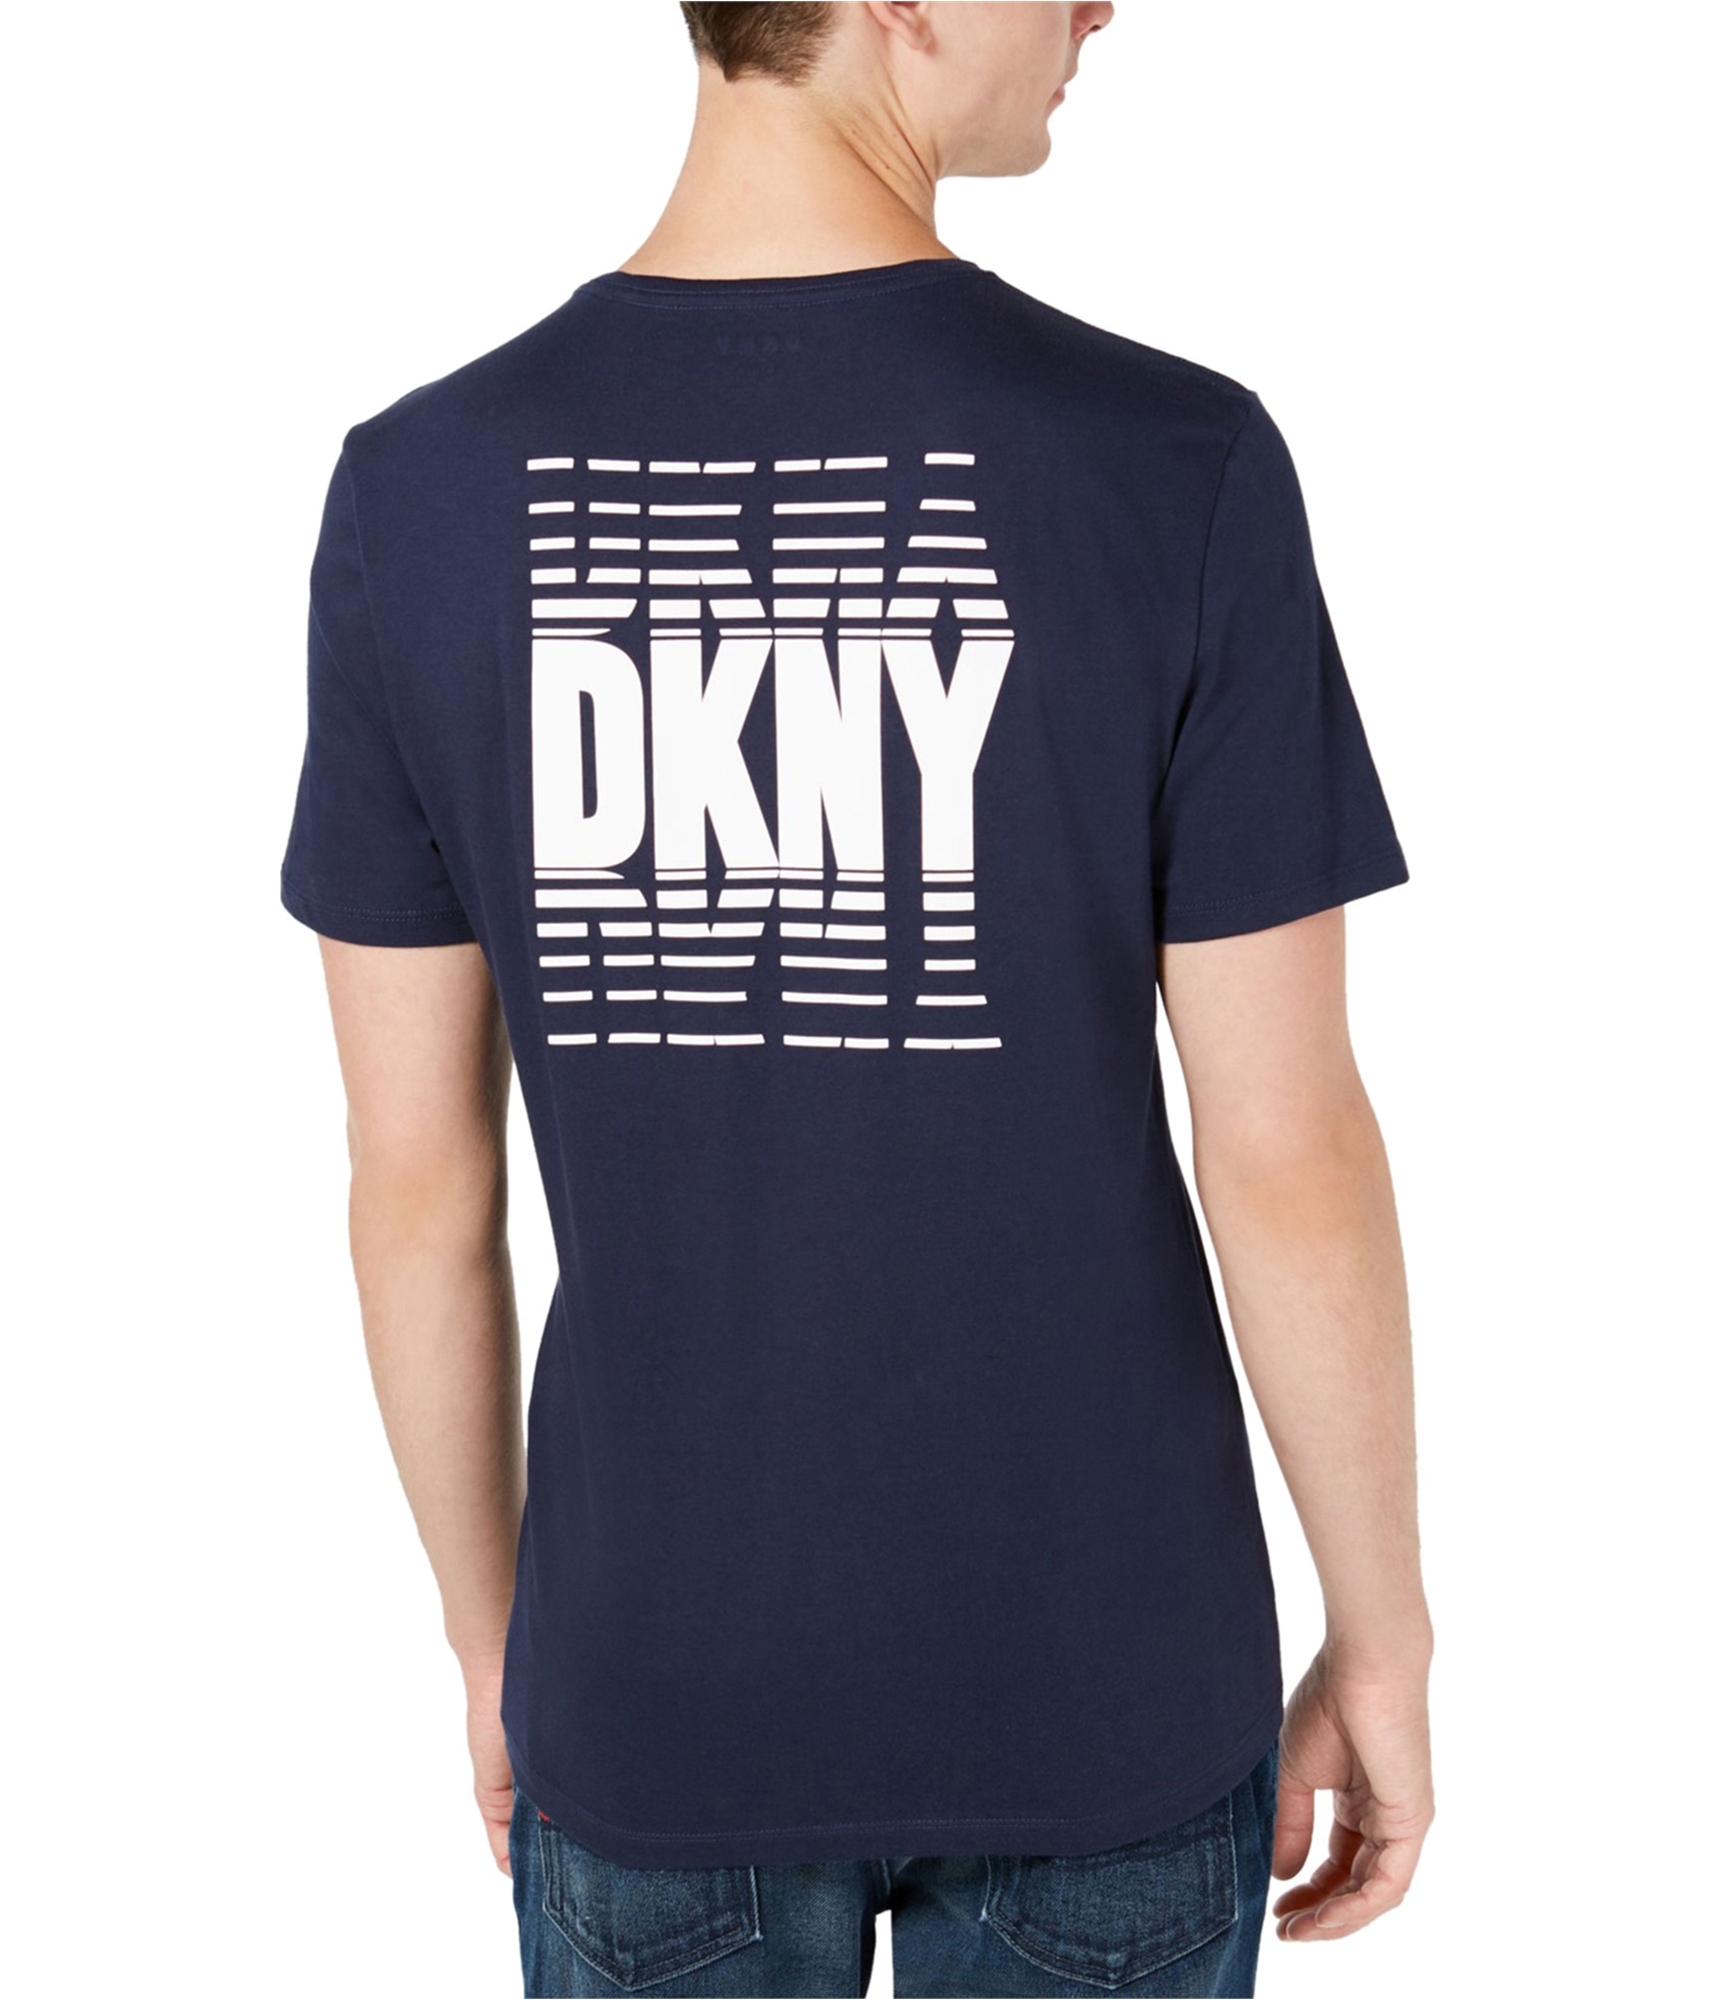 Buy a Dkny Mens Back Printed Graphic T-Shirt